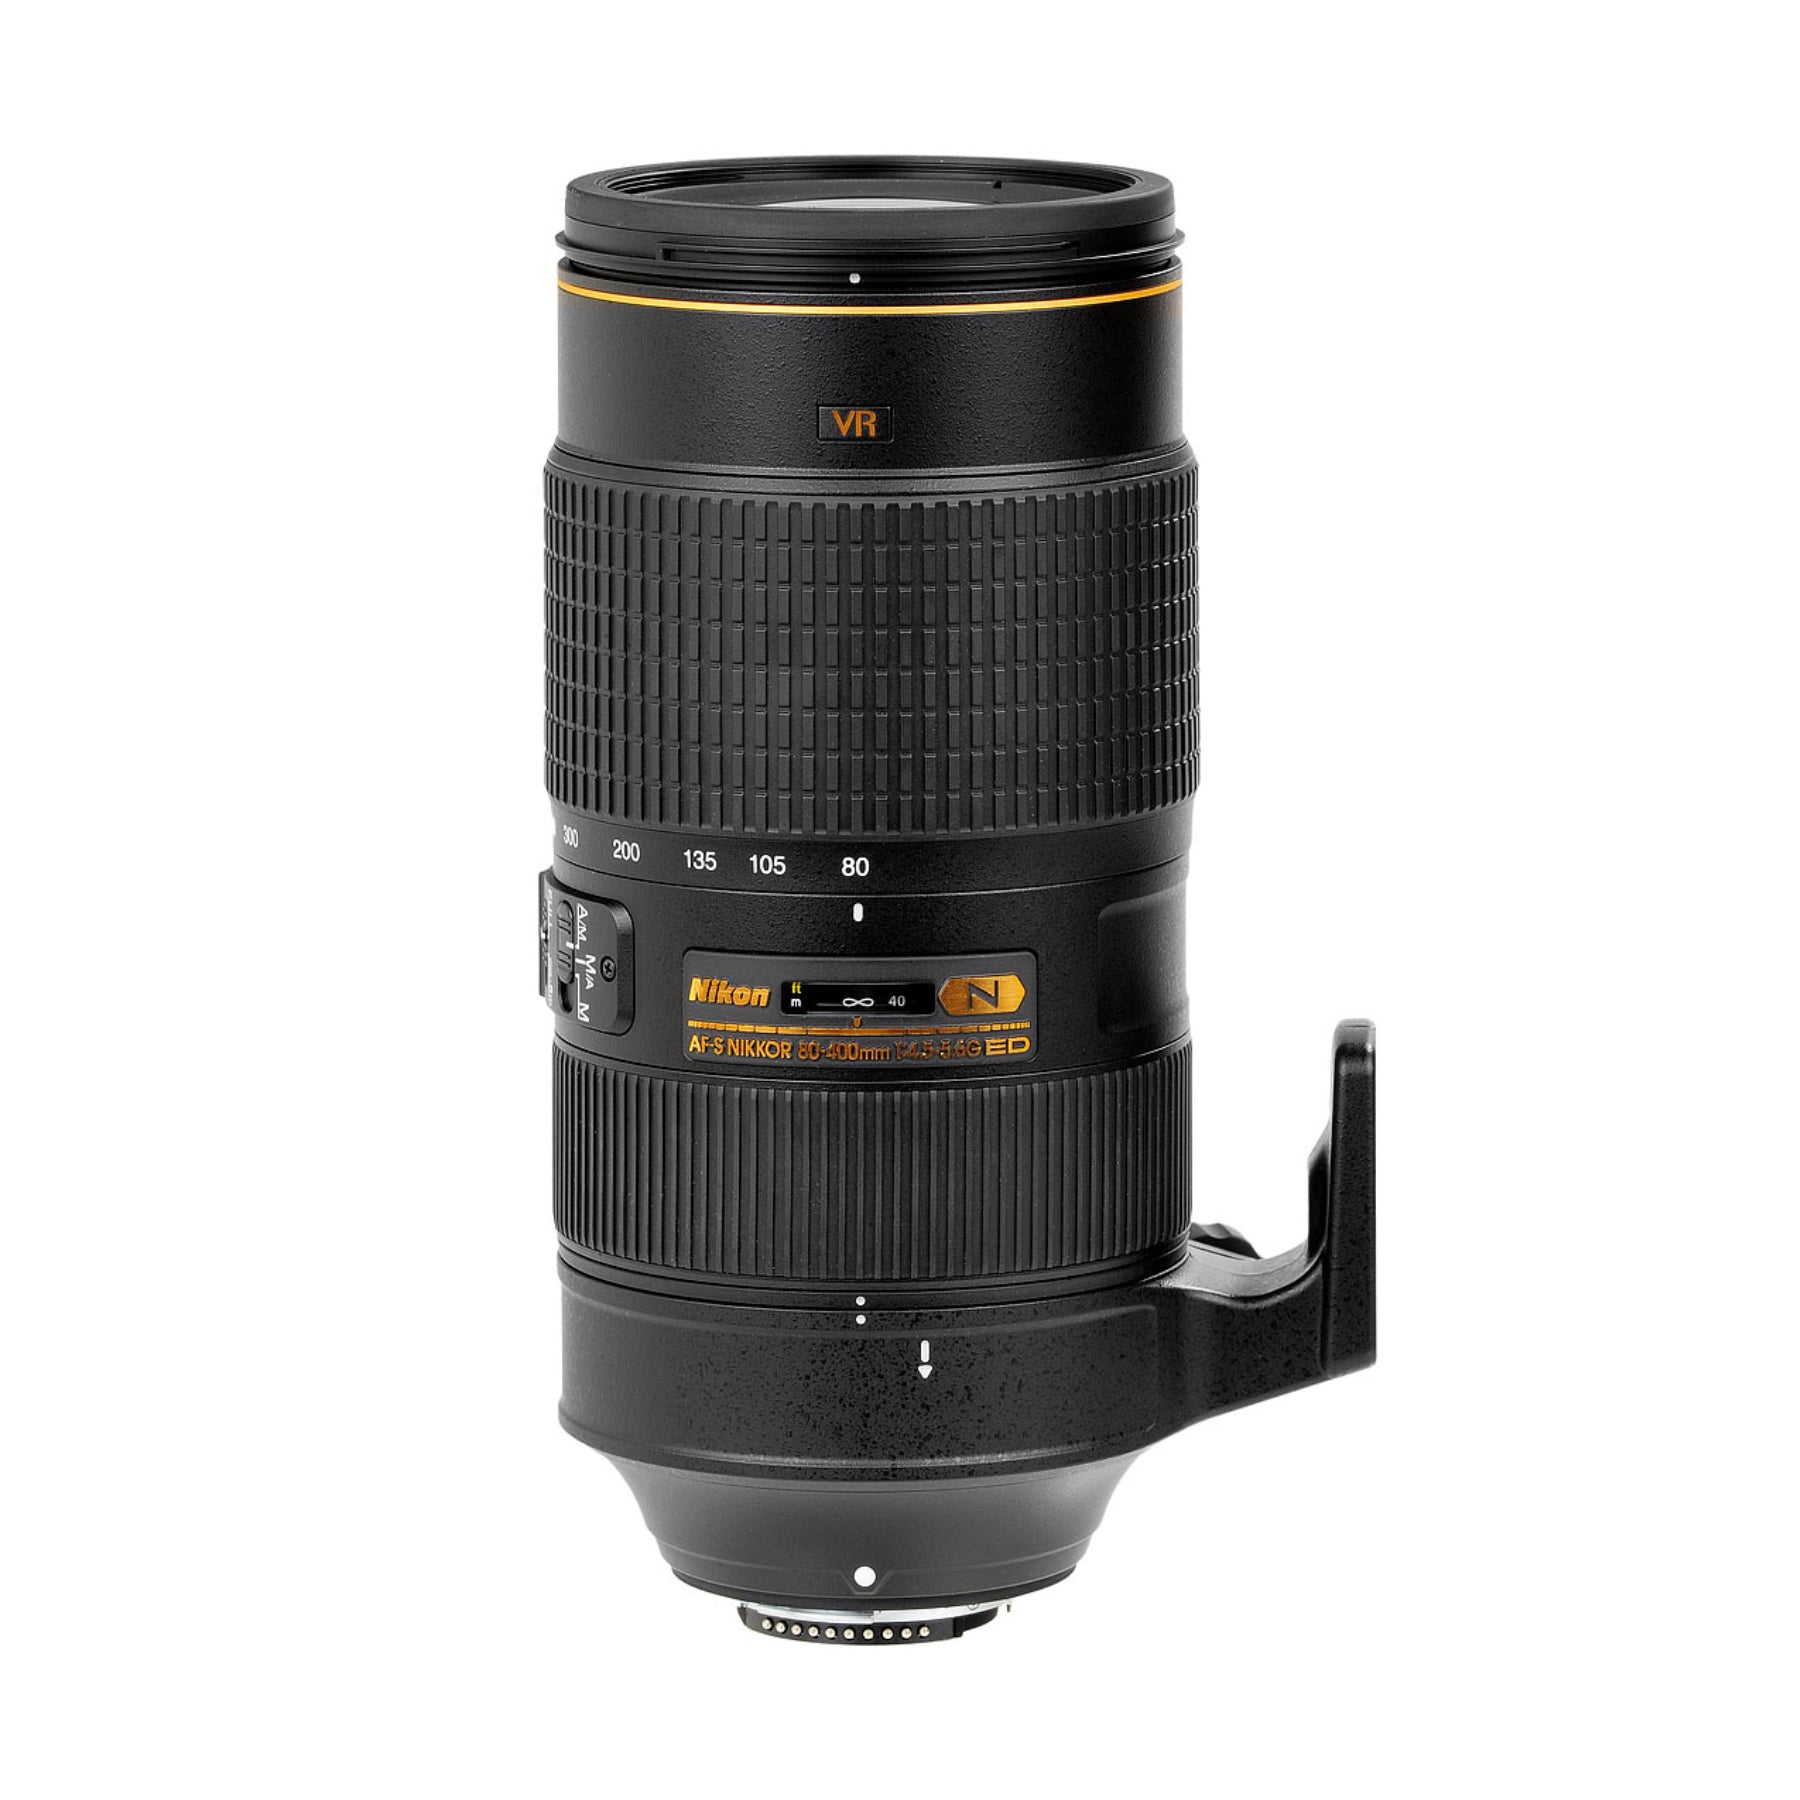 Nikon 80 - 400mm 4.5-5.6 lens for hire